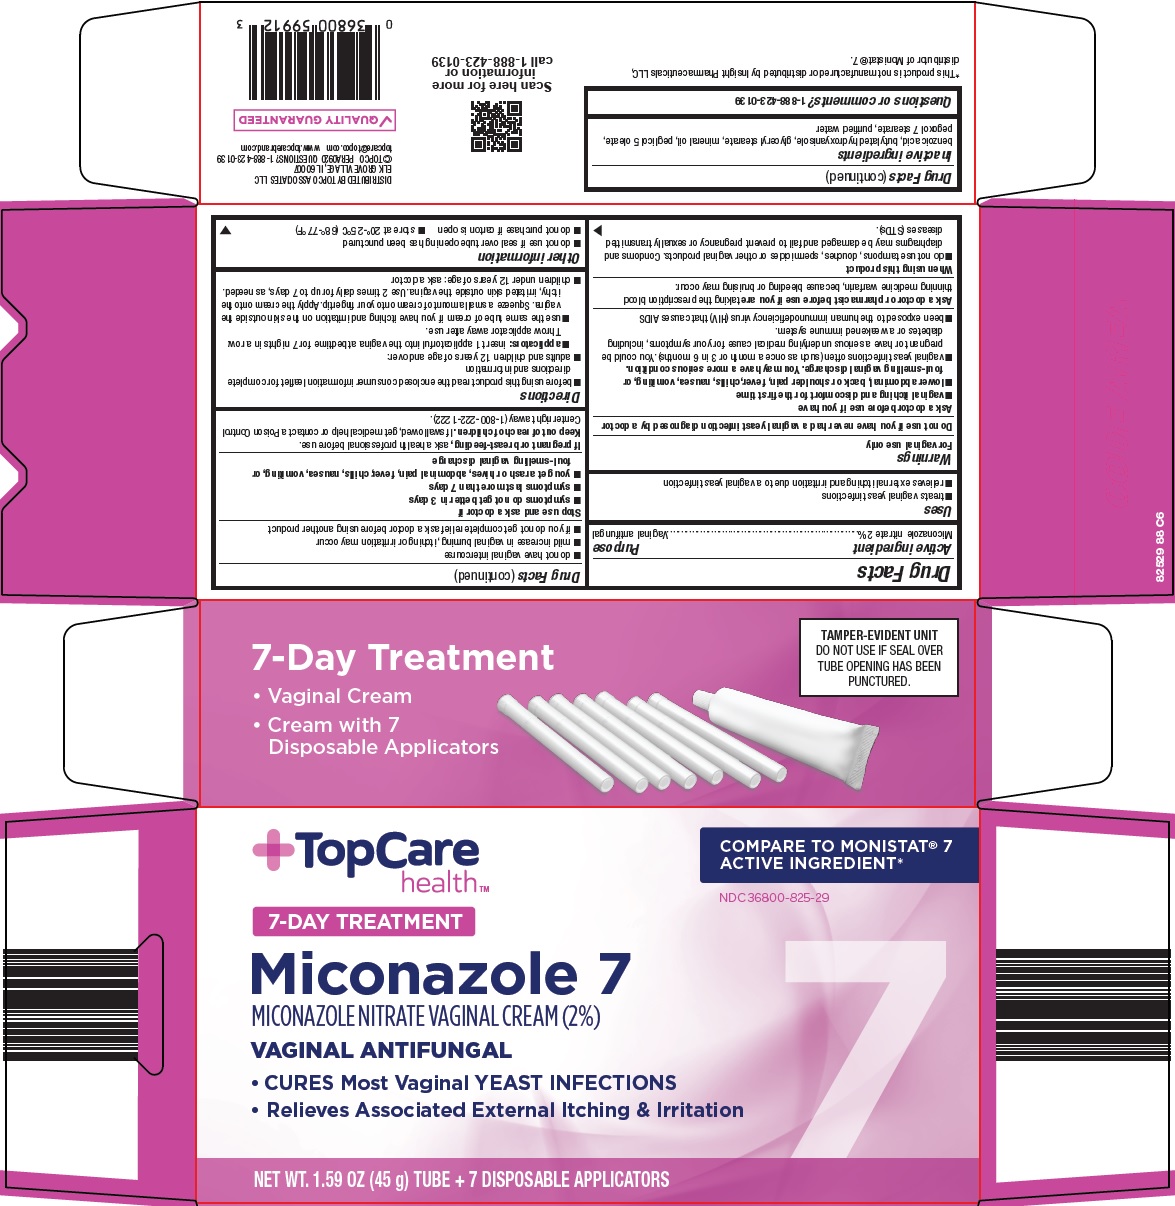 825-88-miconazole-7